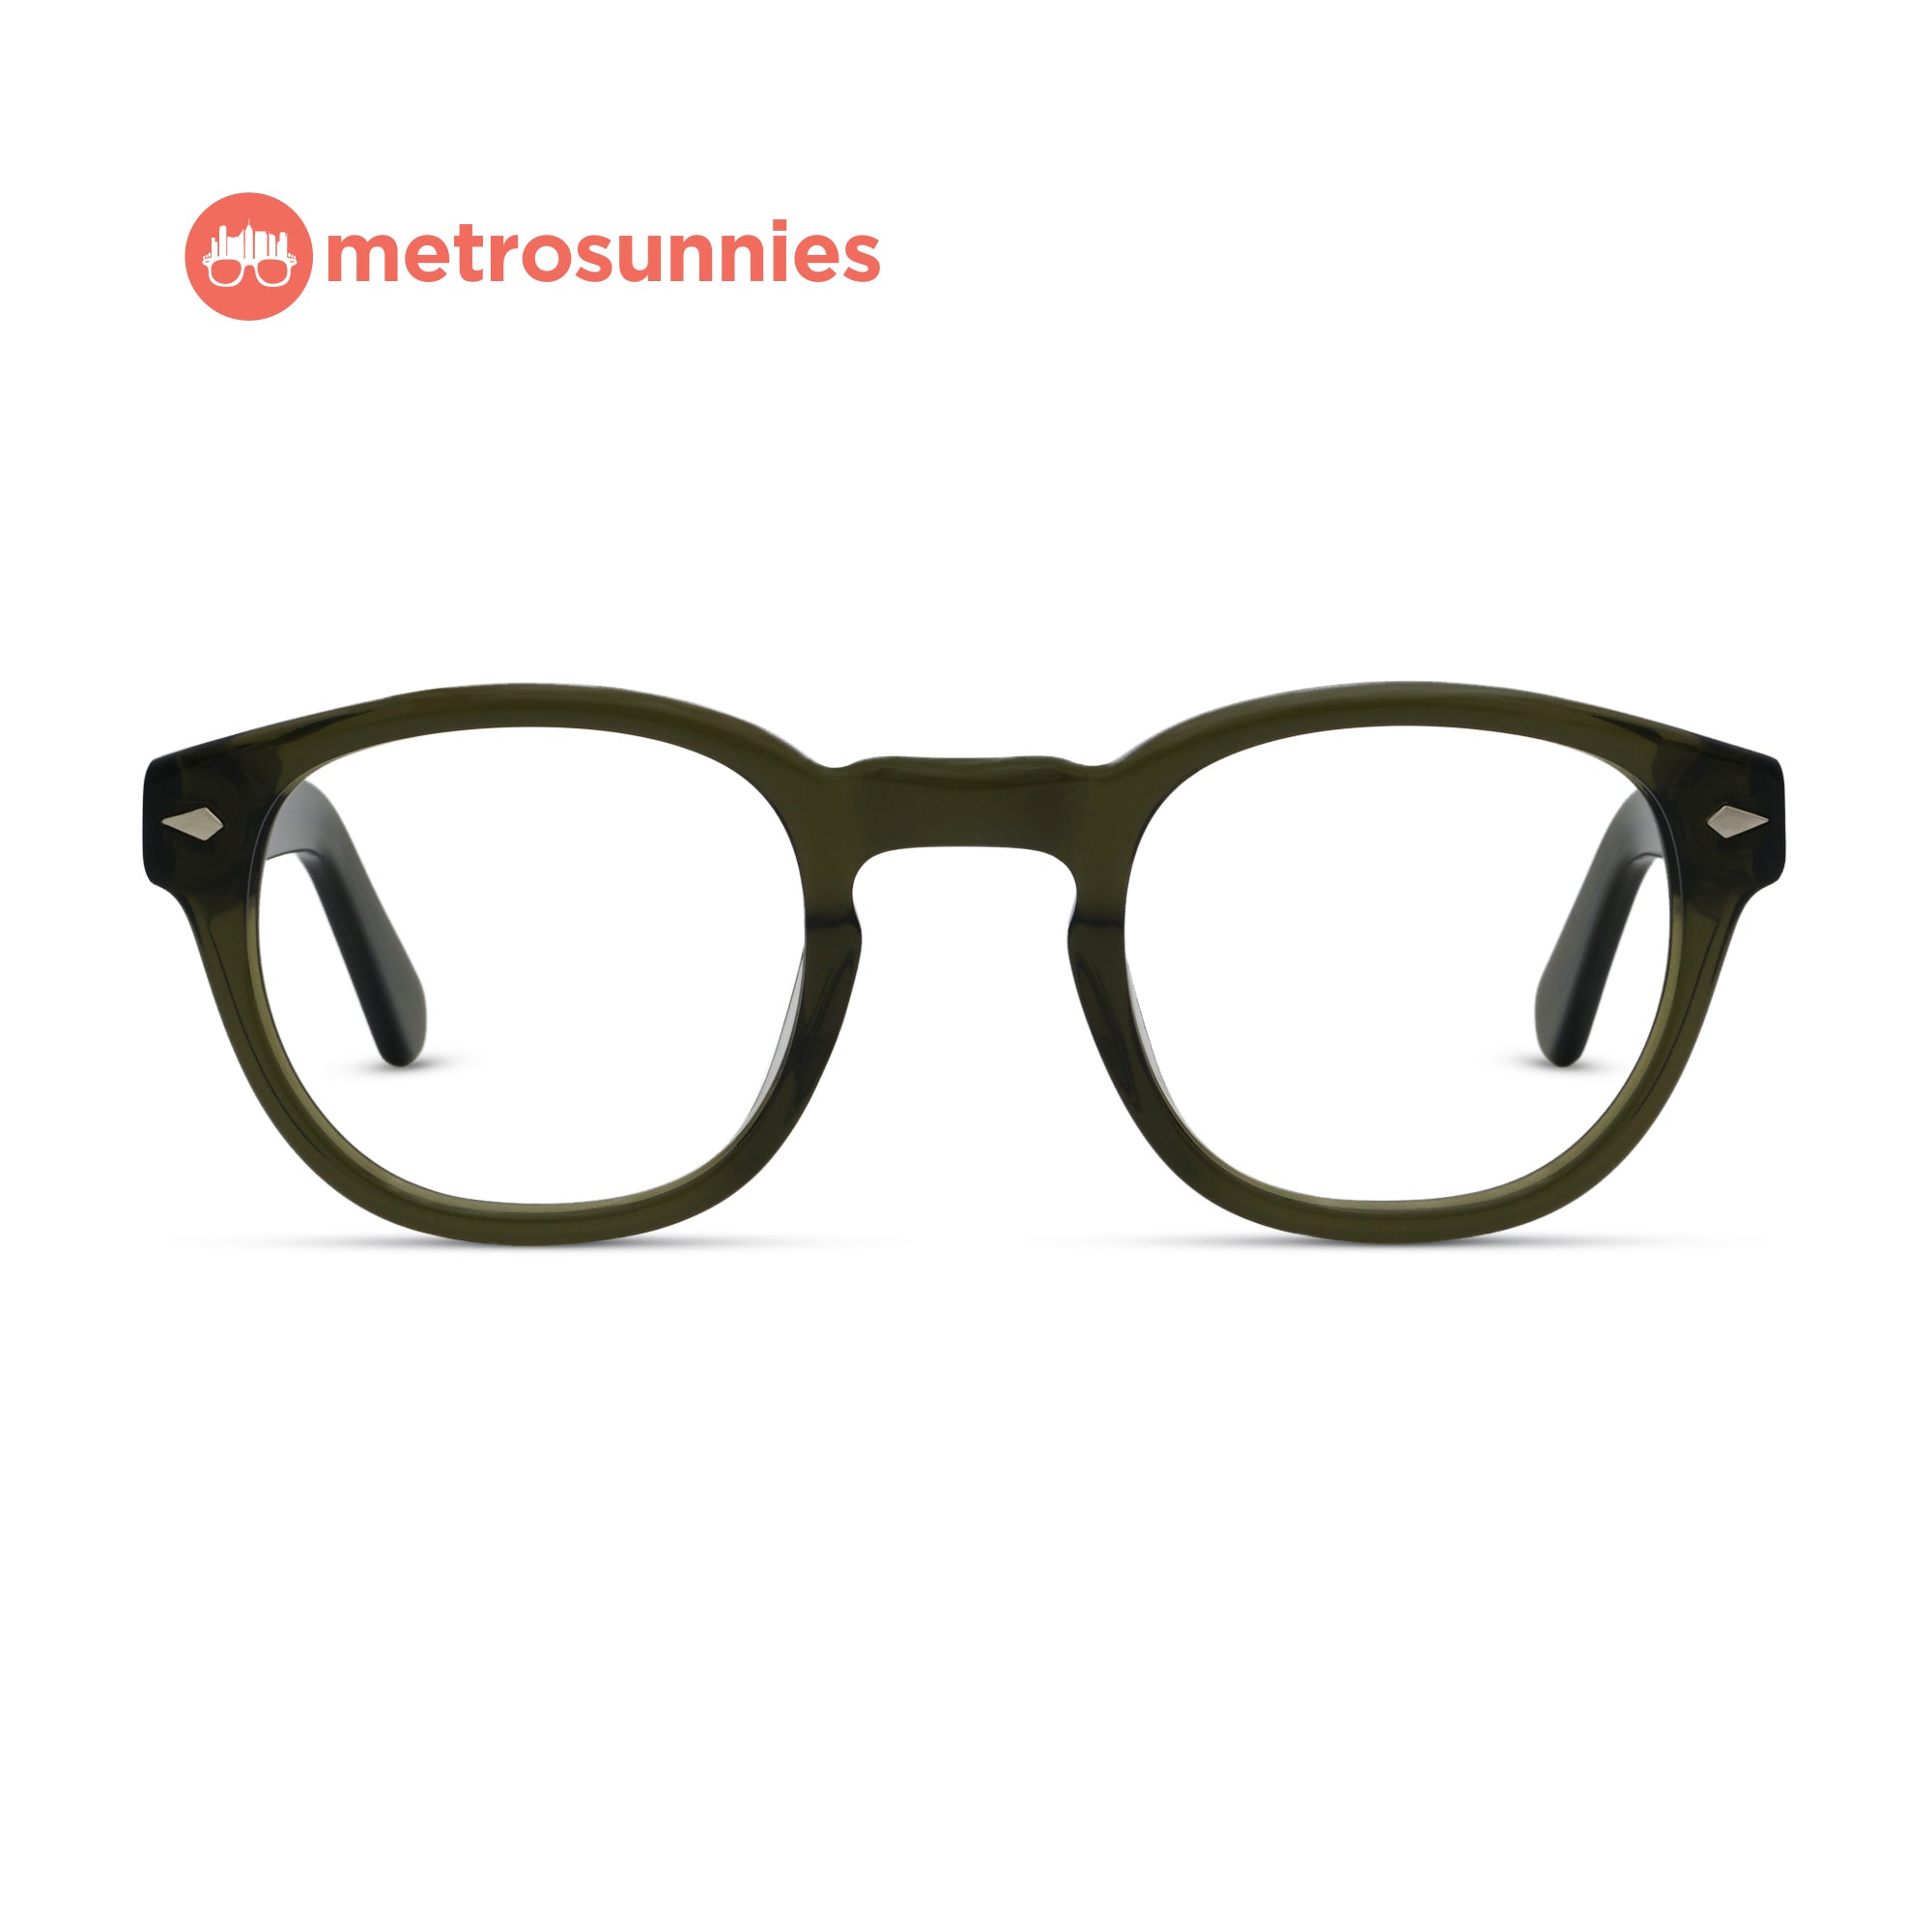 MetroSunnies Lance Specs (Moss) / Handmade Acetate / Replaceable Lens / Eyeglasses